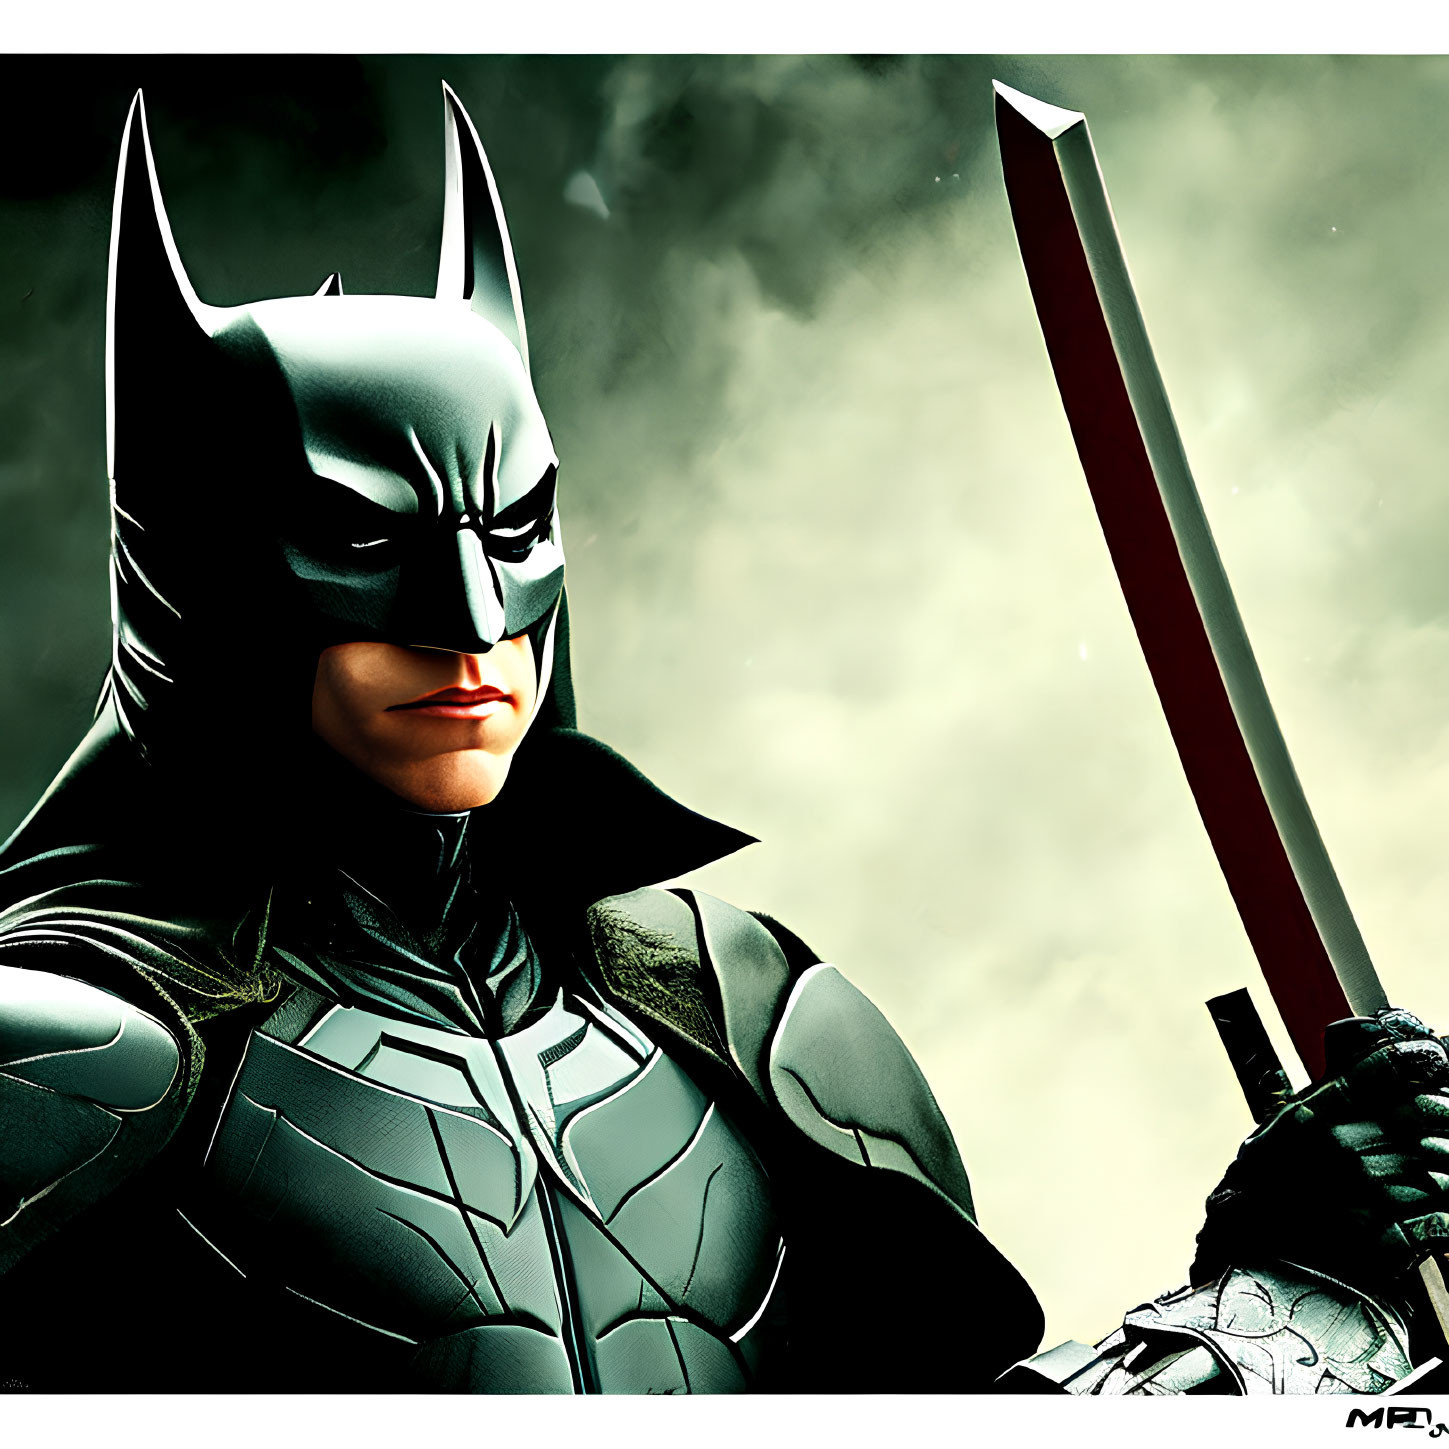 Dark-suited Batman with sword under dramatic sky